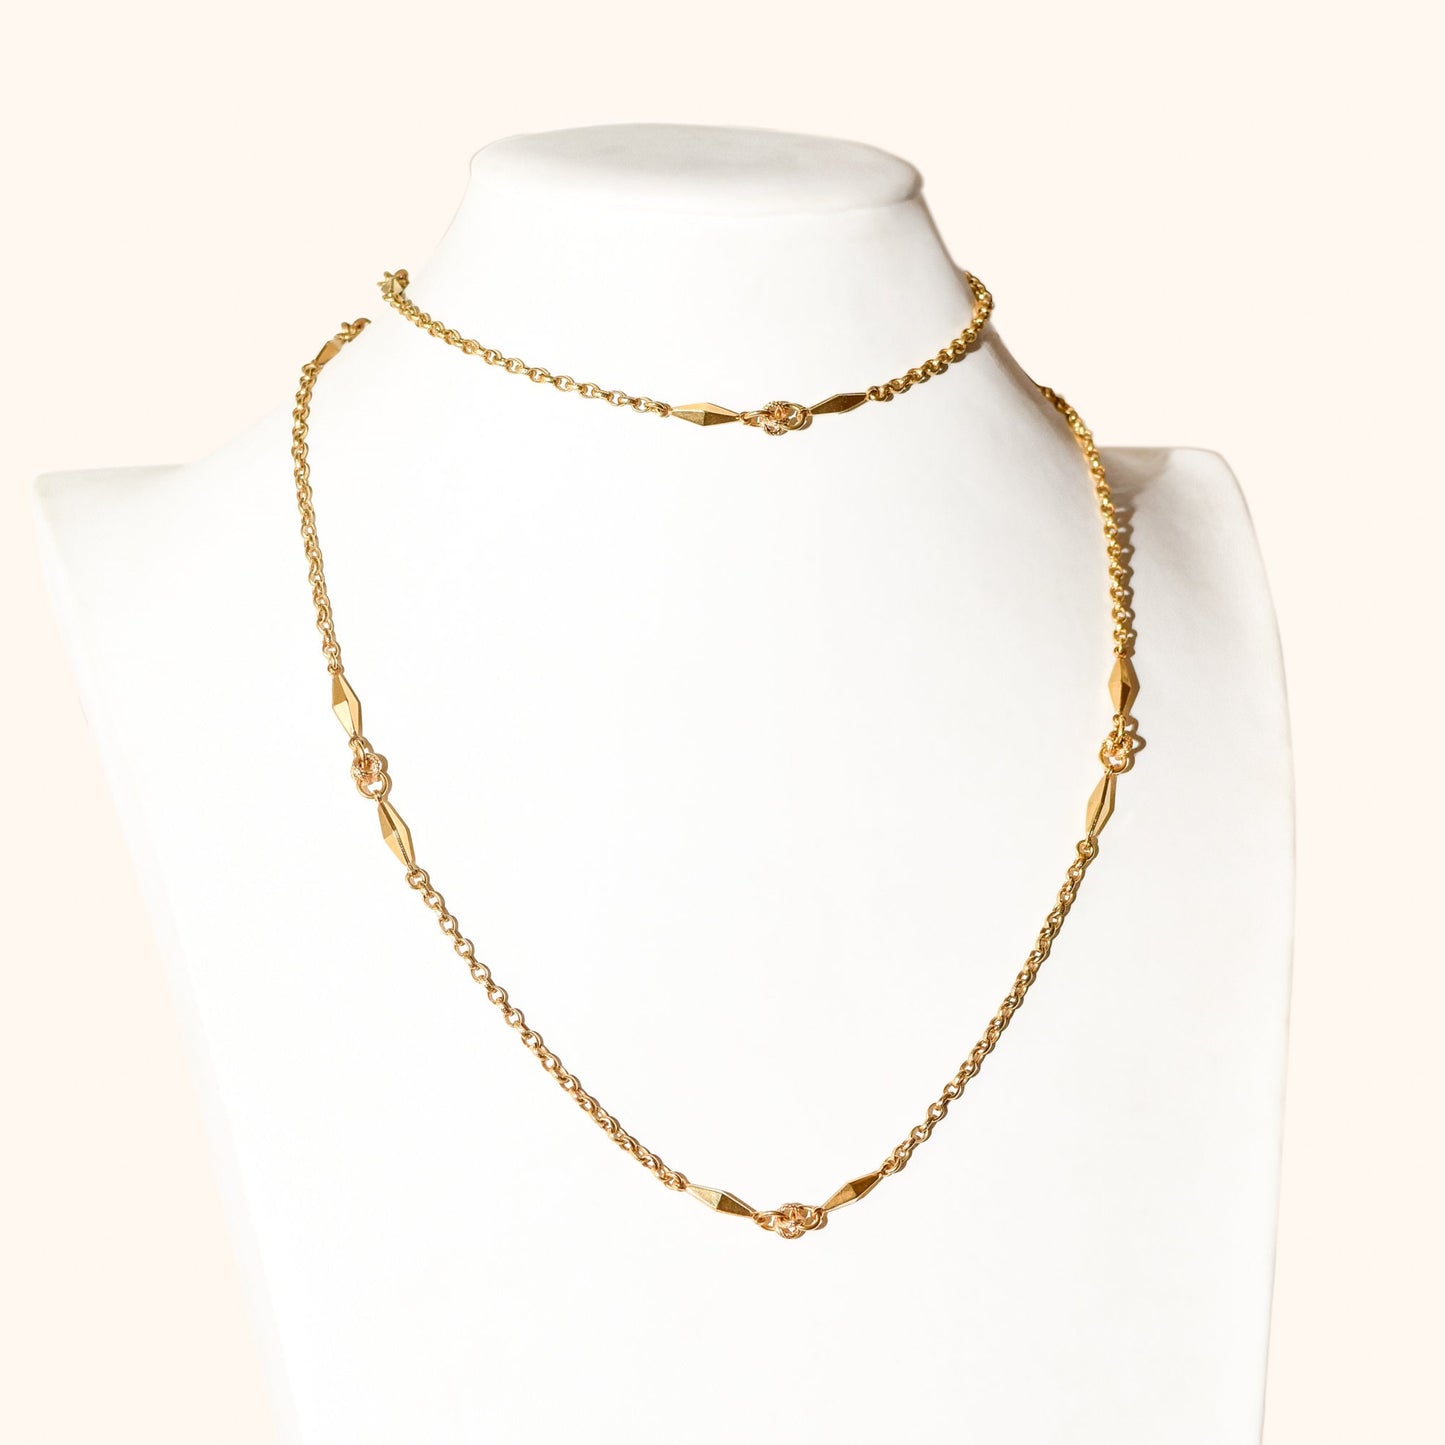 MCM 18K Yellow Gold Chain Link Opera Necklace, Geometric Beads, Estate Jewelry, 34.57" L